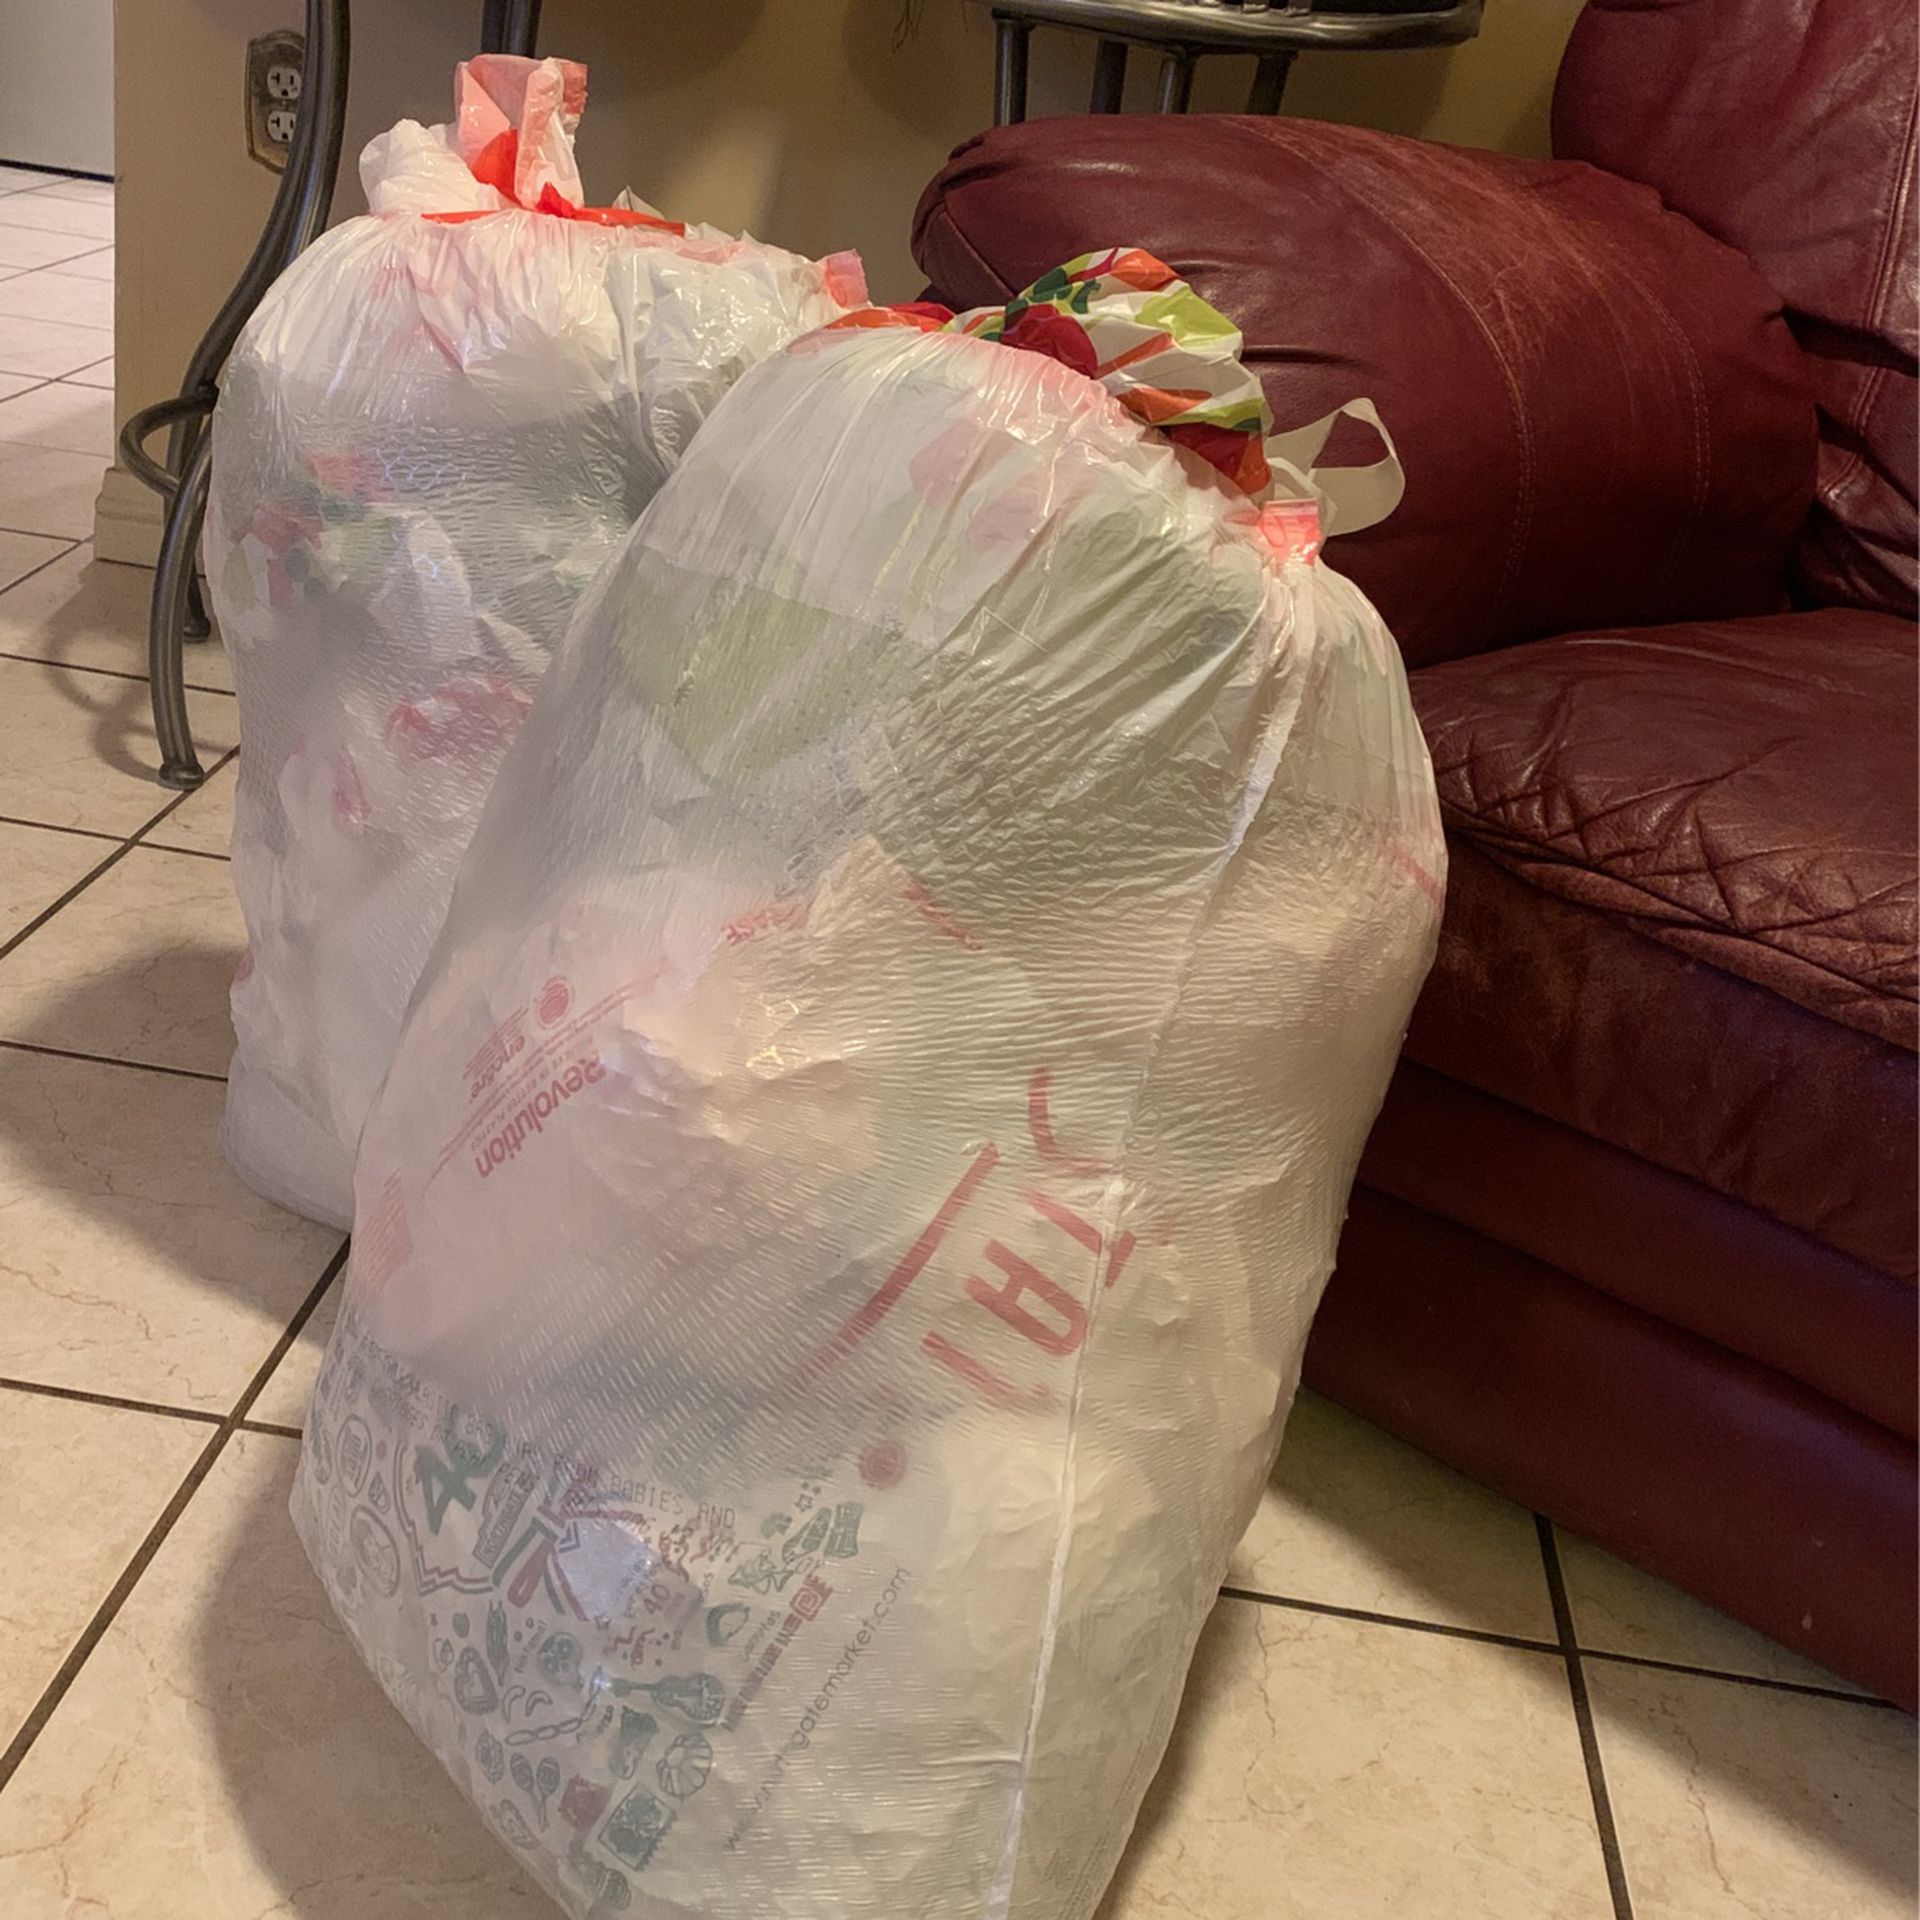 Two Big Full Bags of Reusable bags